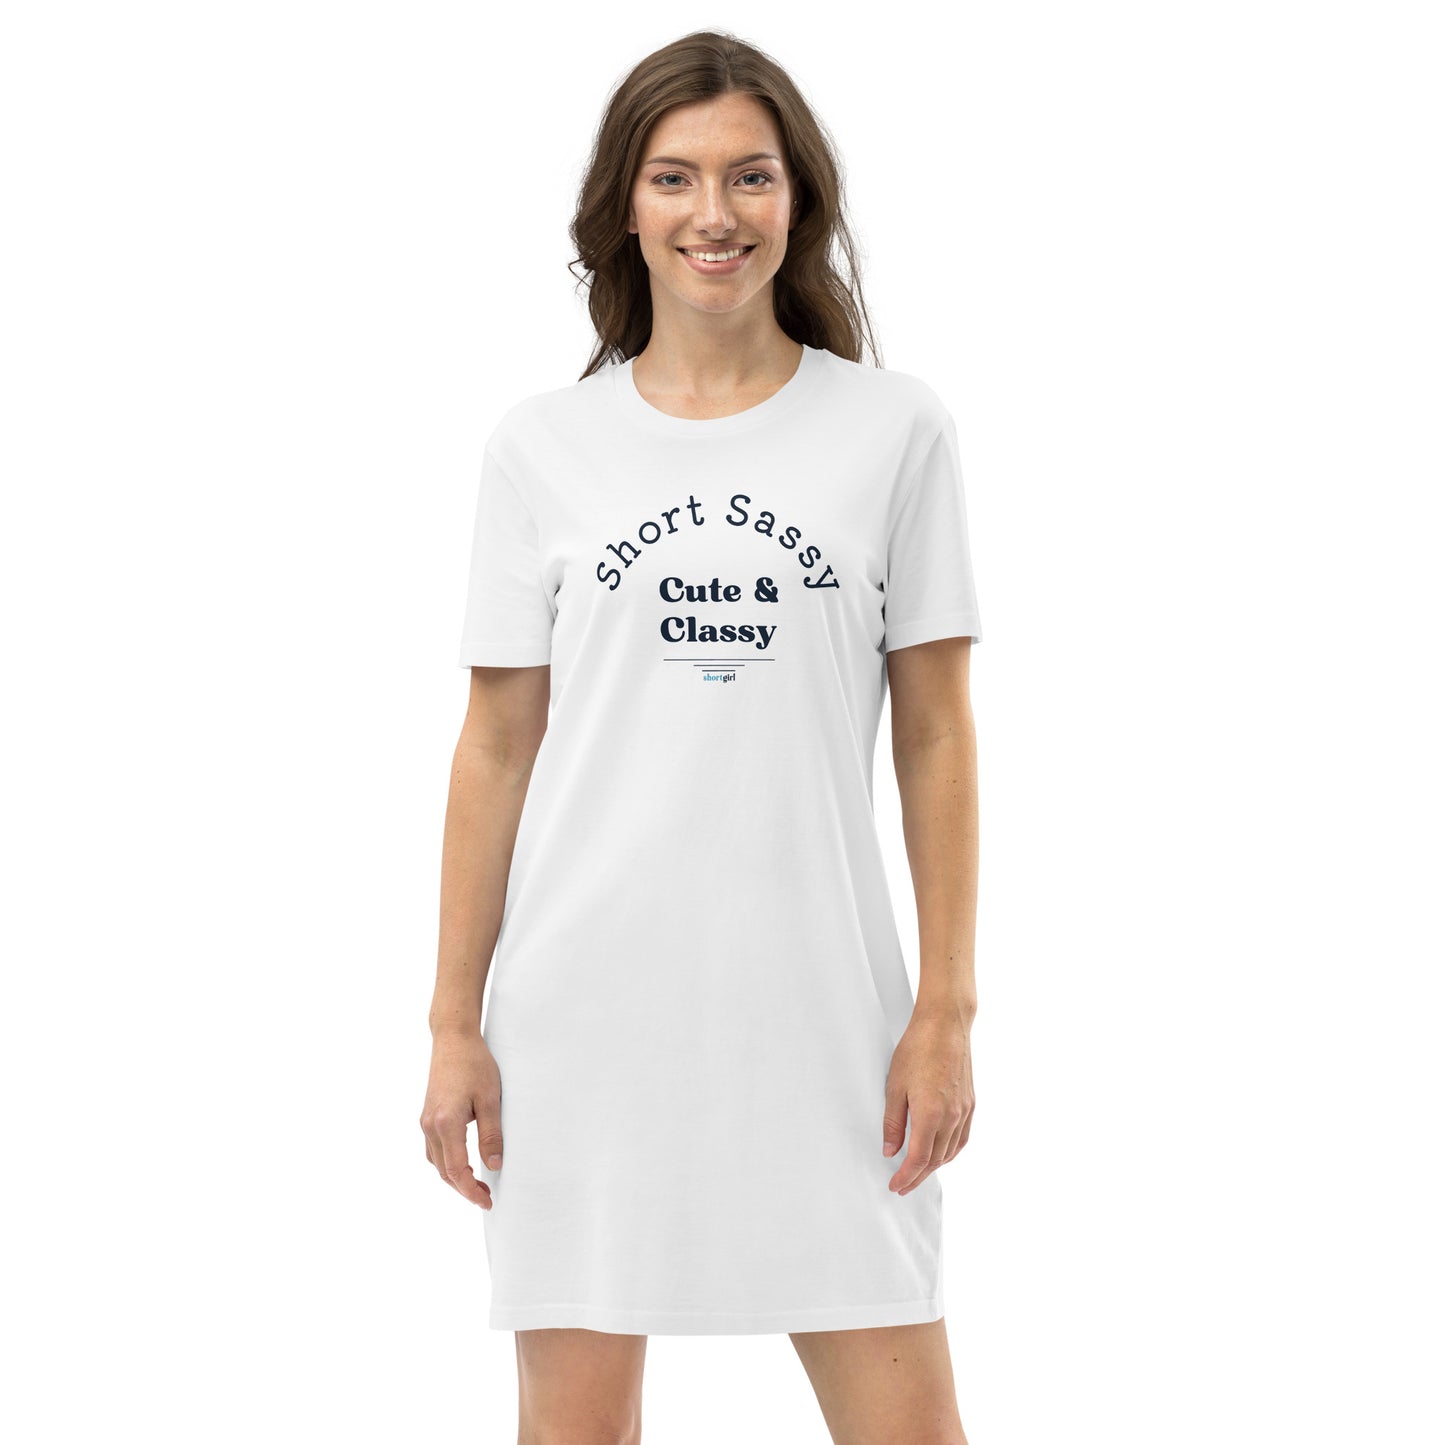 Organic cotton t-shirt dress - Short, Sassy, Cute & Classy